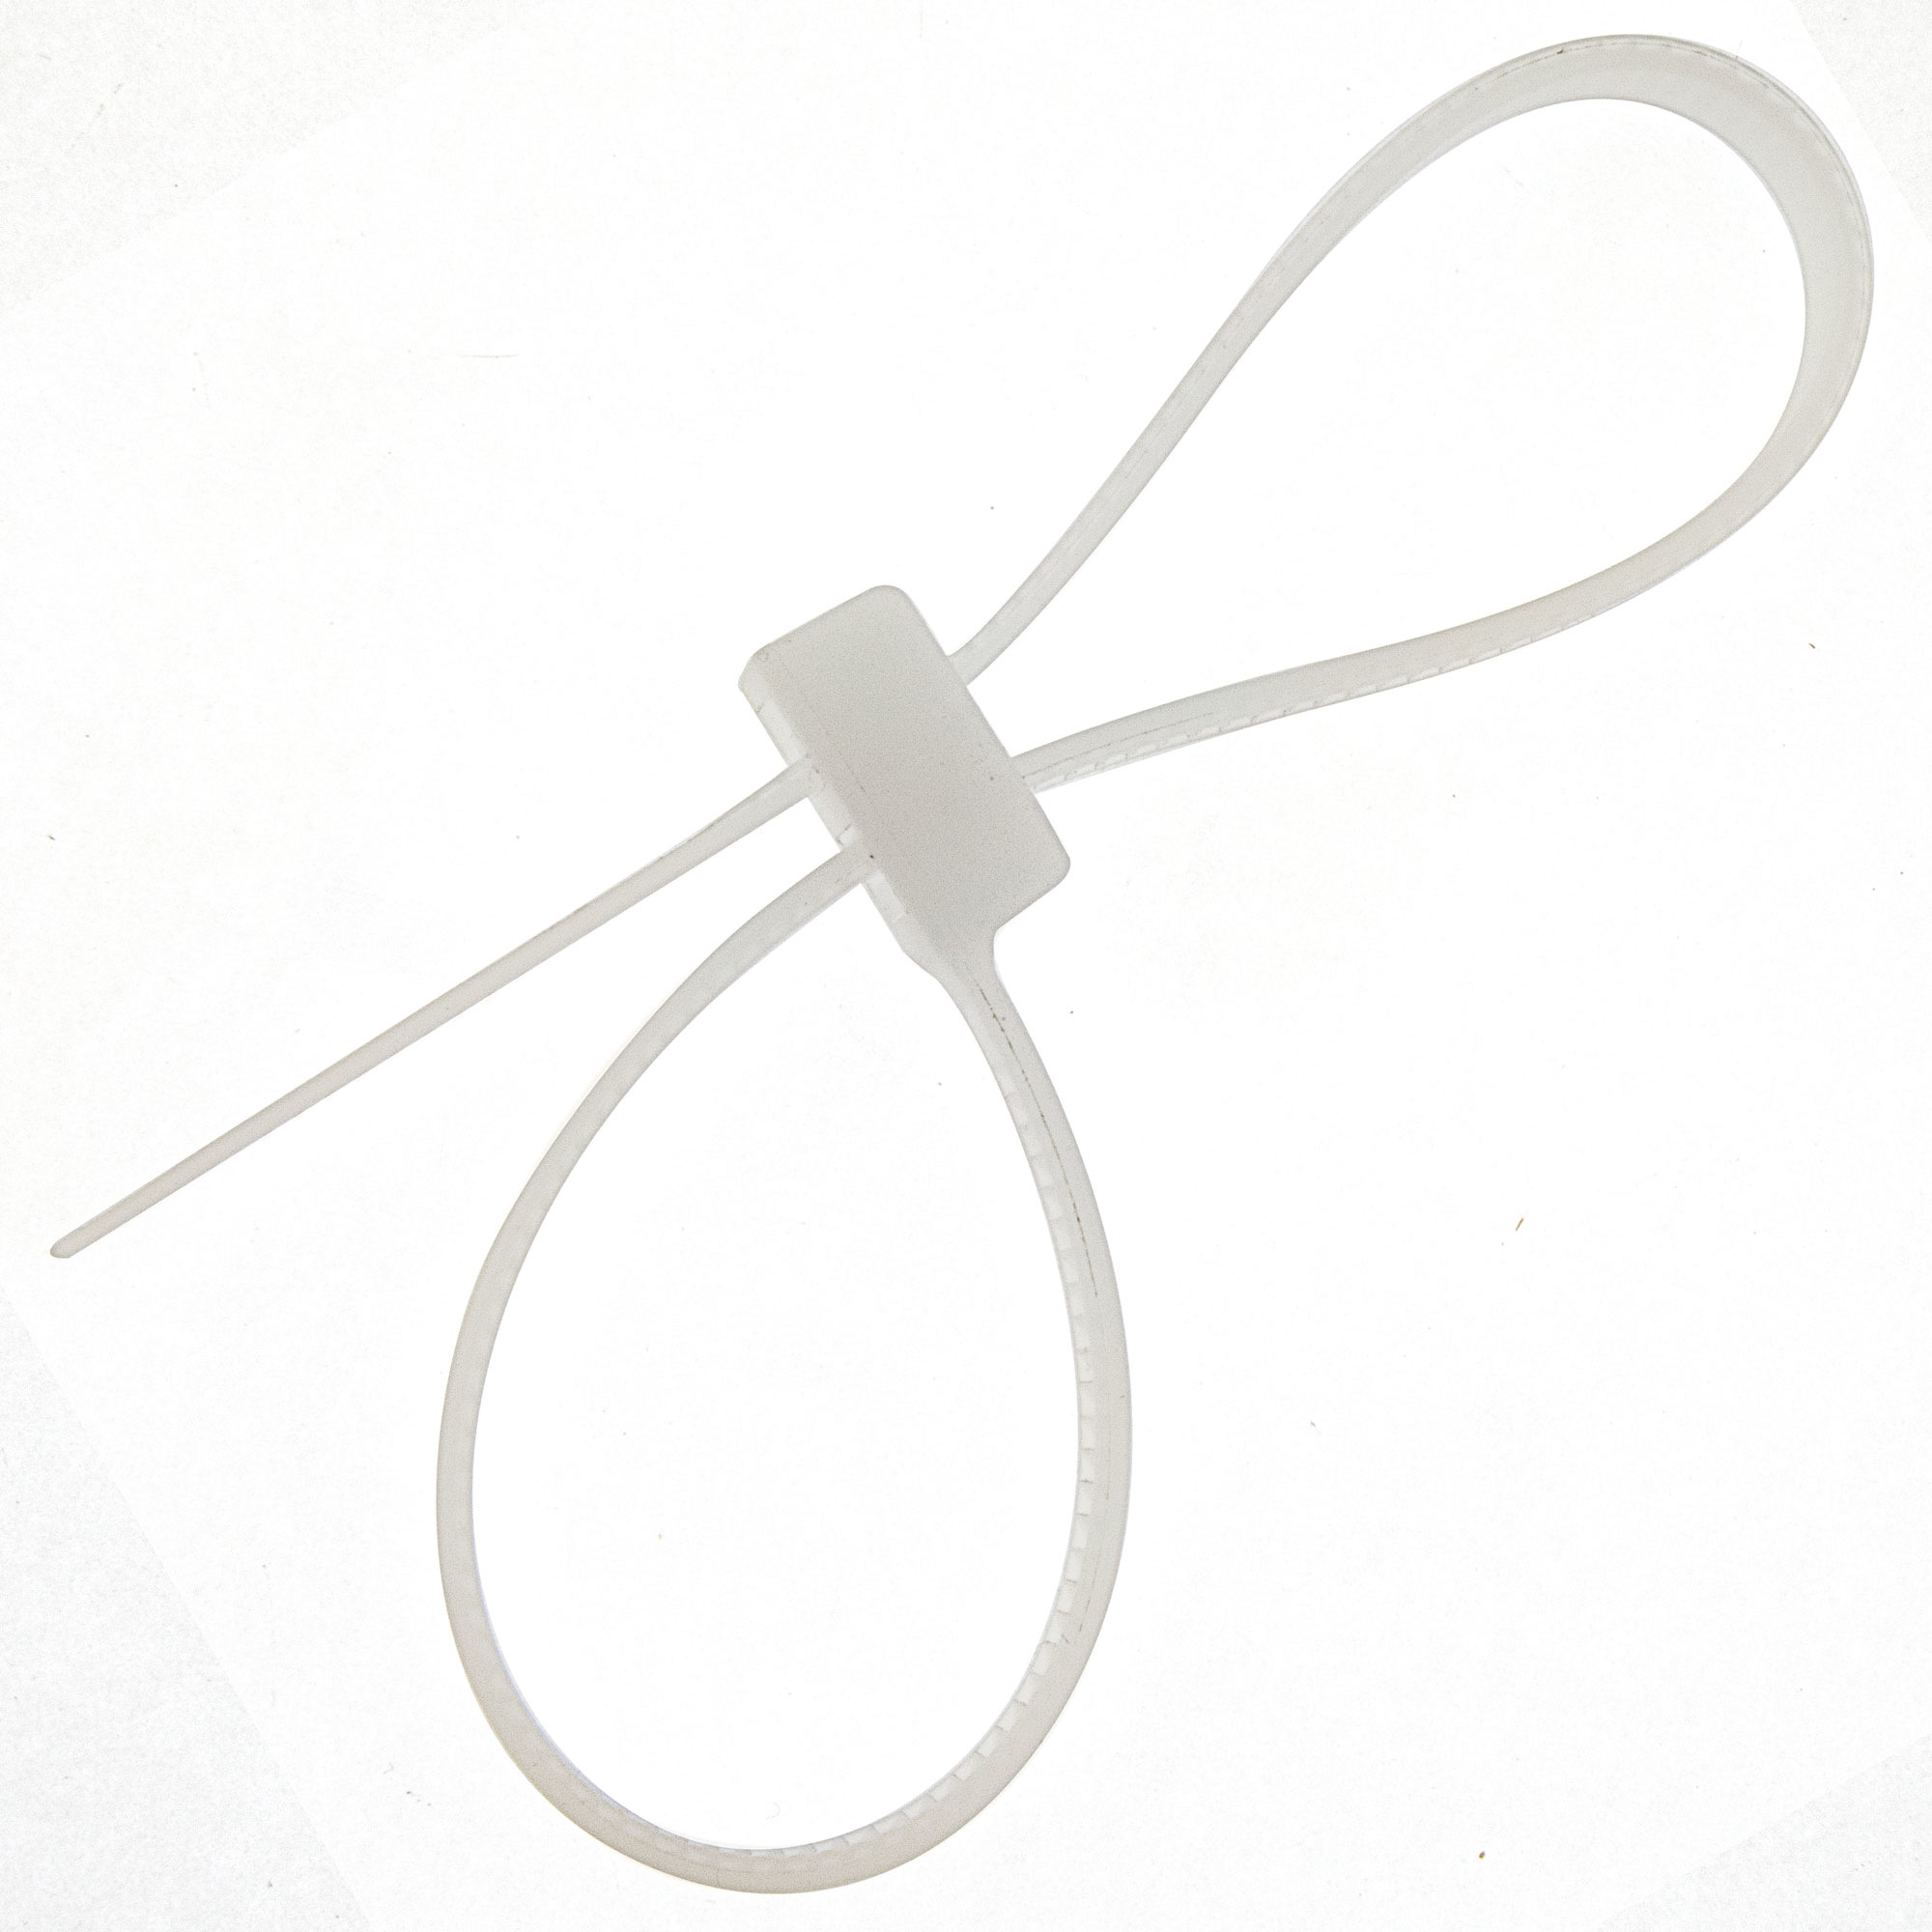 Cable tie double head 200 x 4,8mm, white, 100PCS